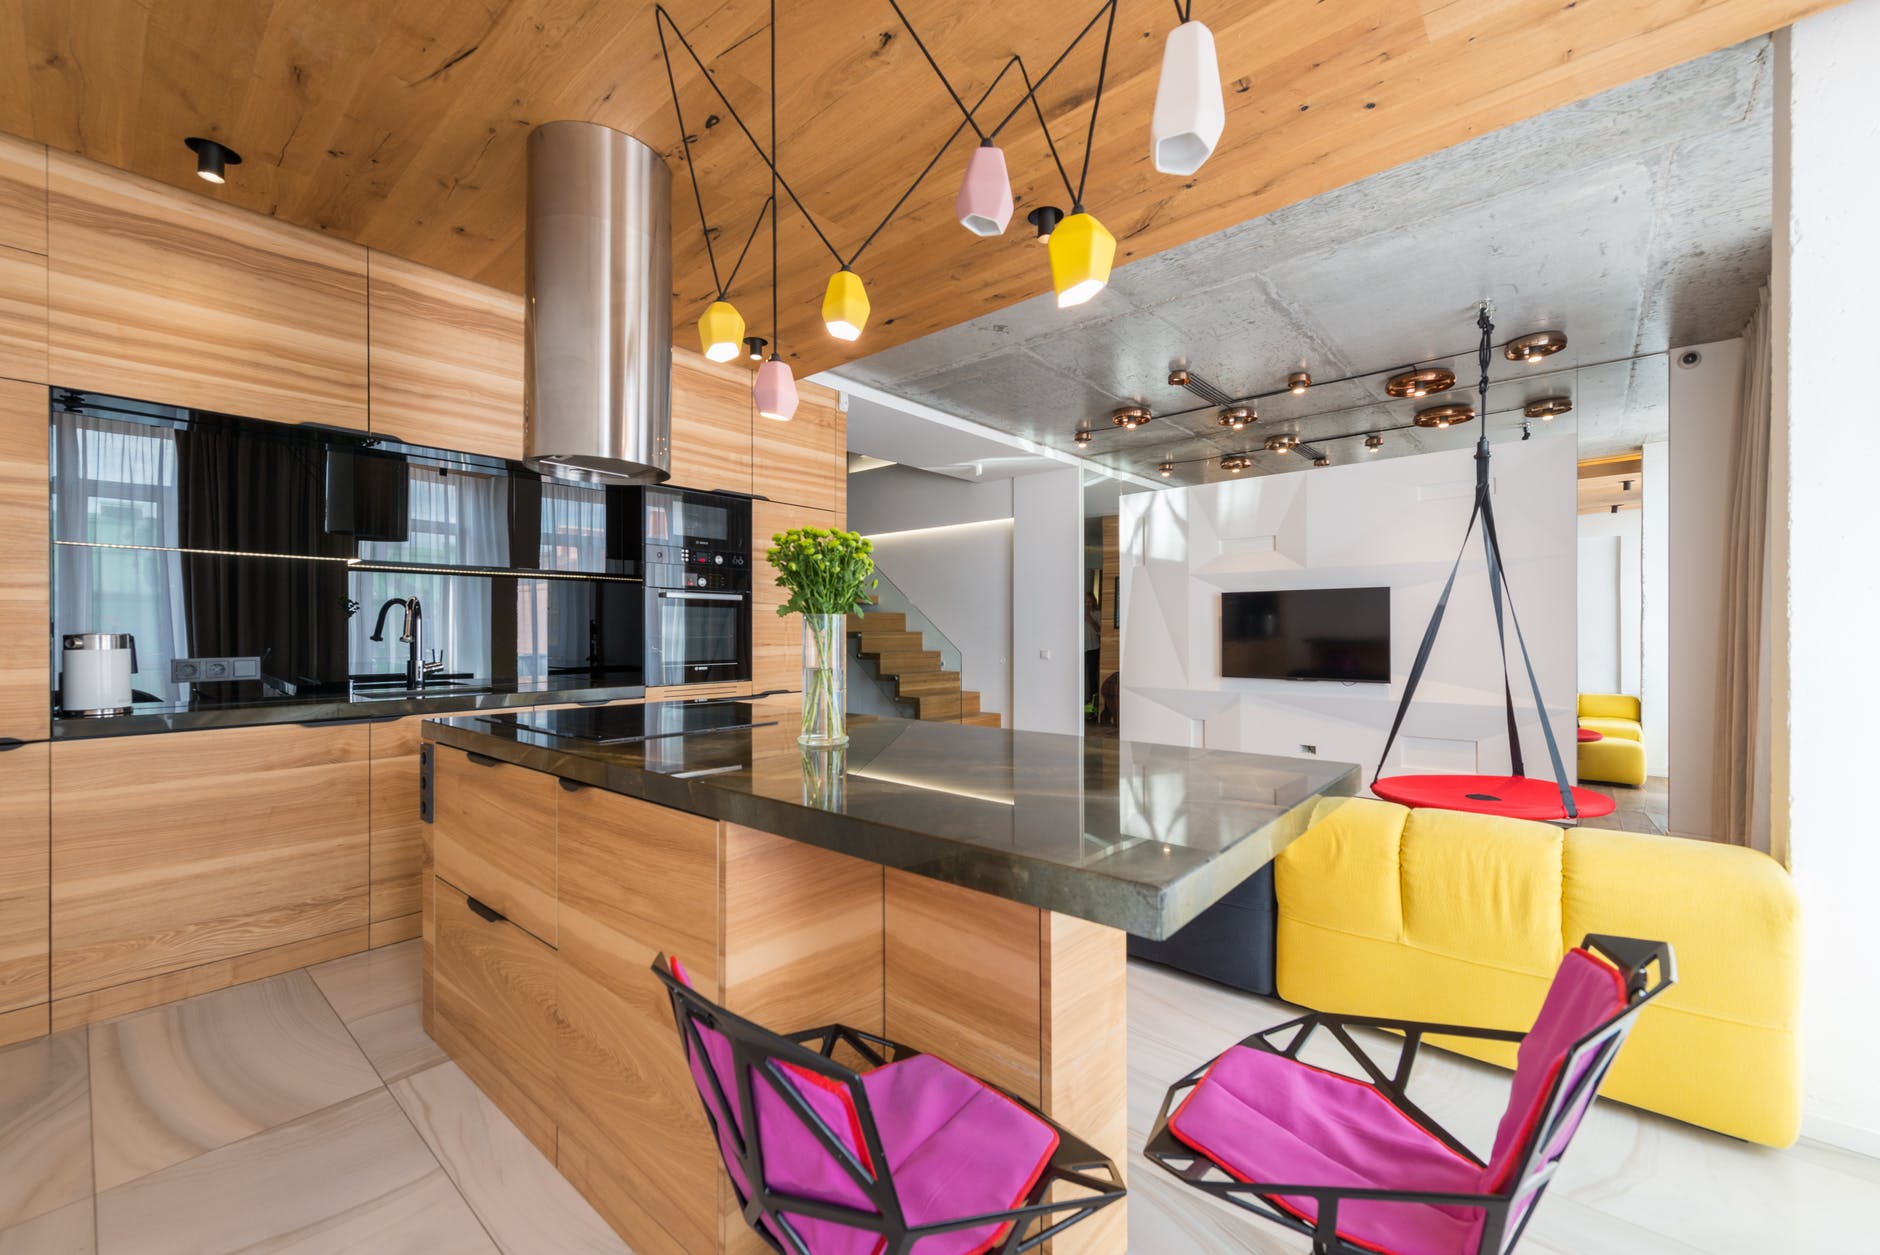 contemporary kitchen interior in studio apartment